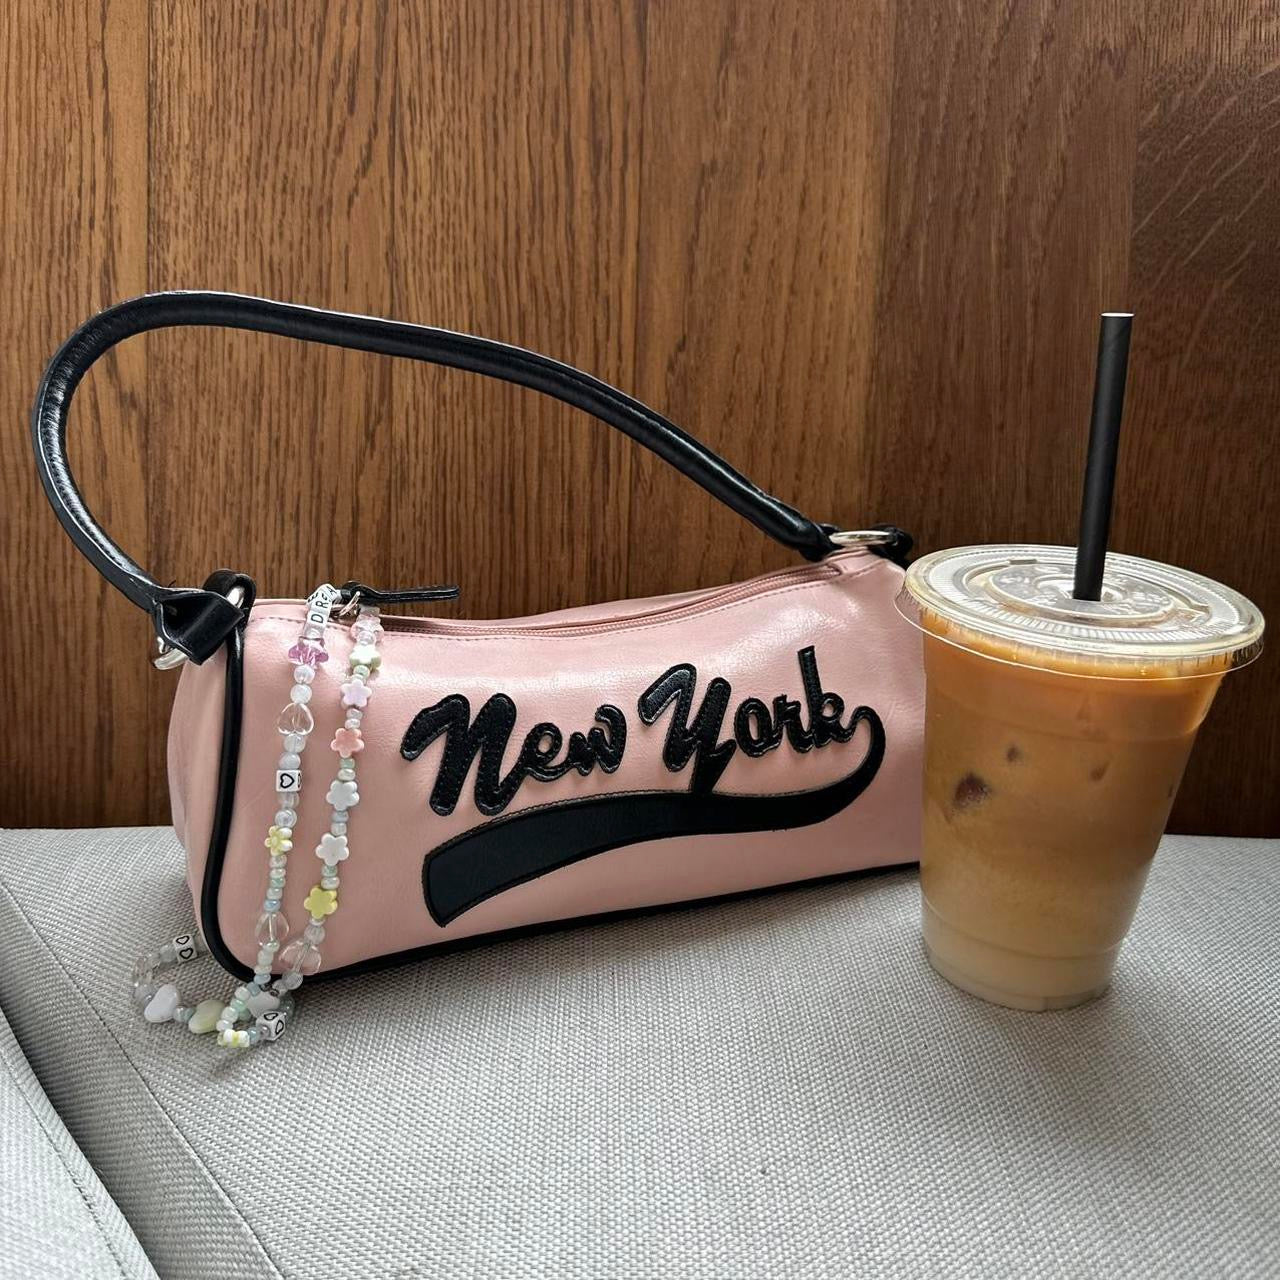 Vintage rare 90’s pink New York bag 🩷